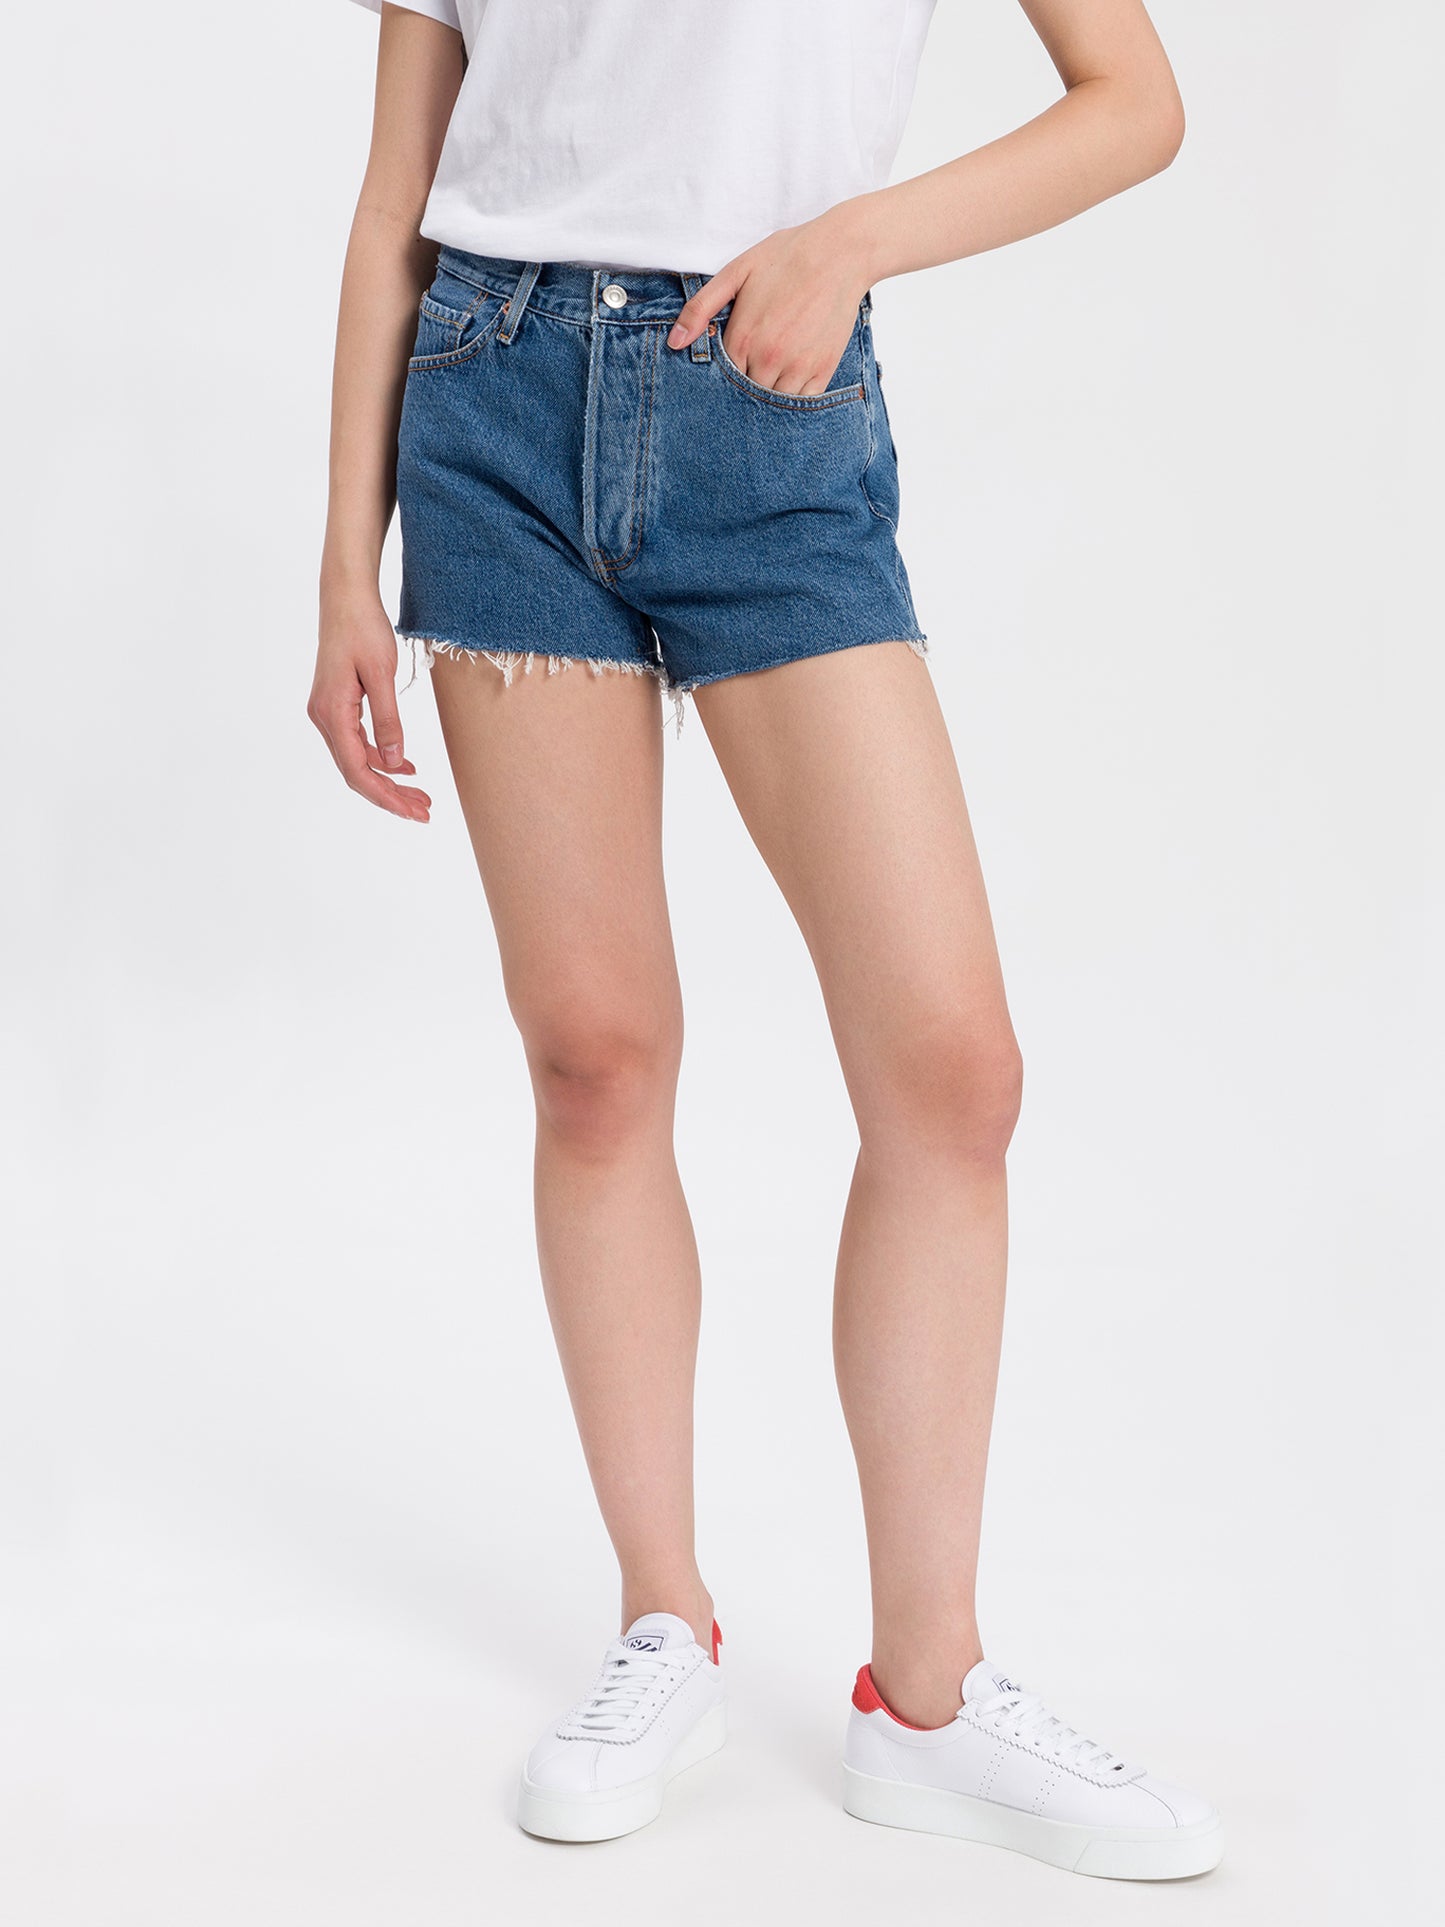 Women's denim shorts medium blue